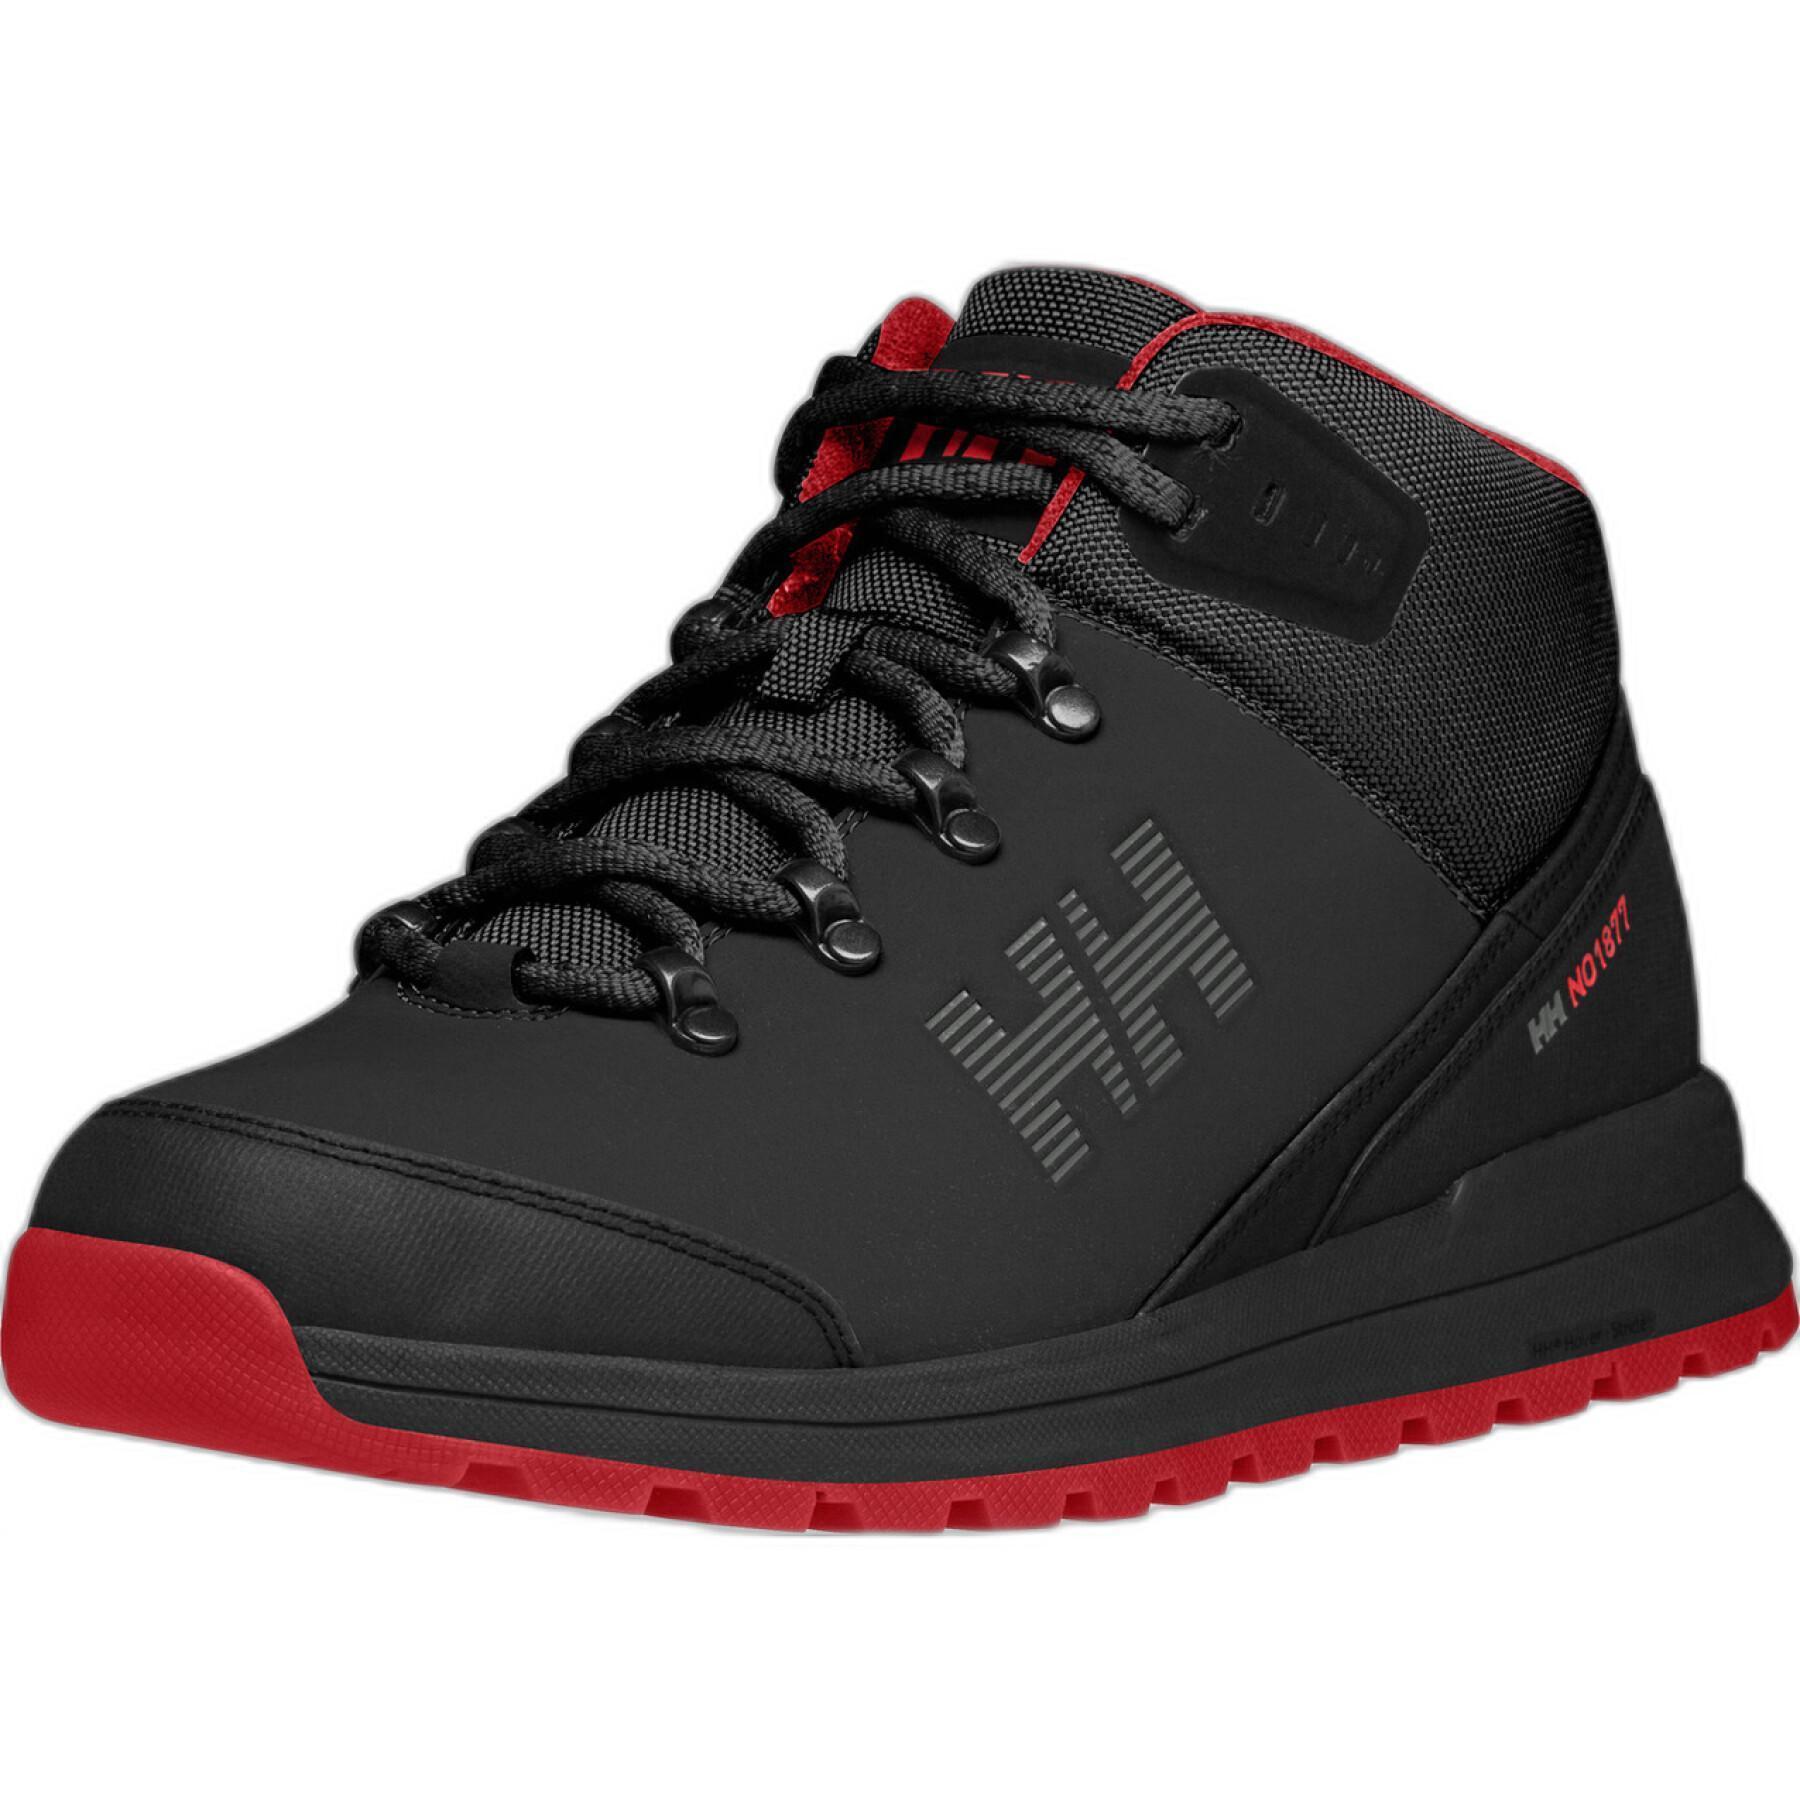 Chaussures Helly Hansen ranger sport